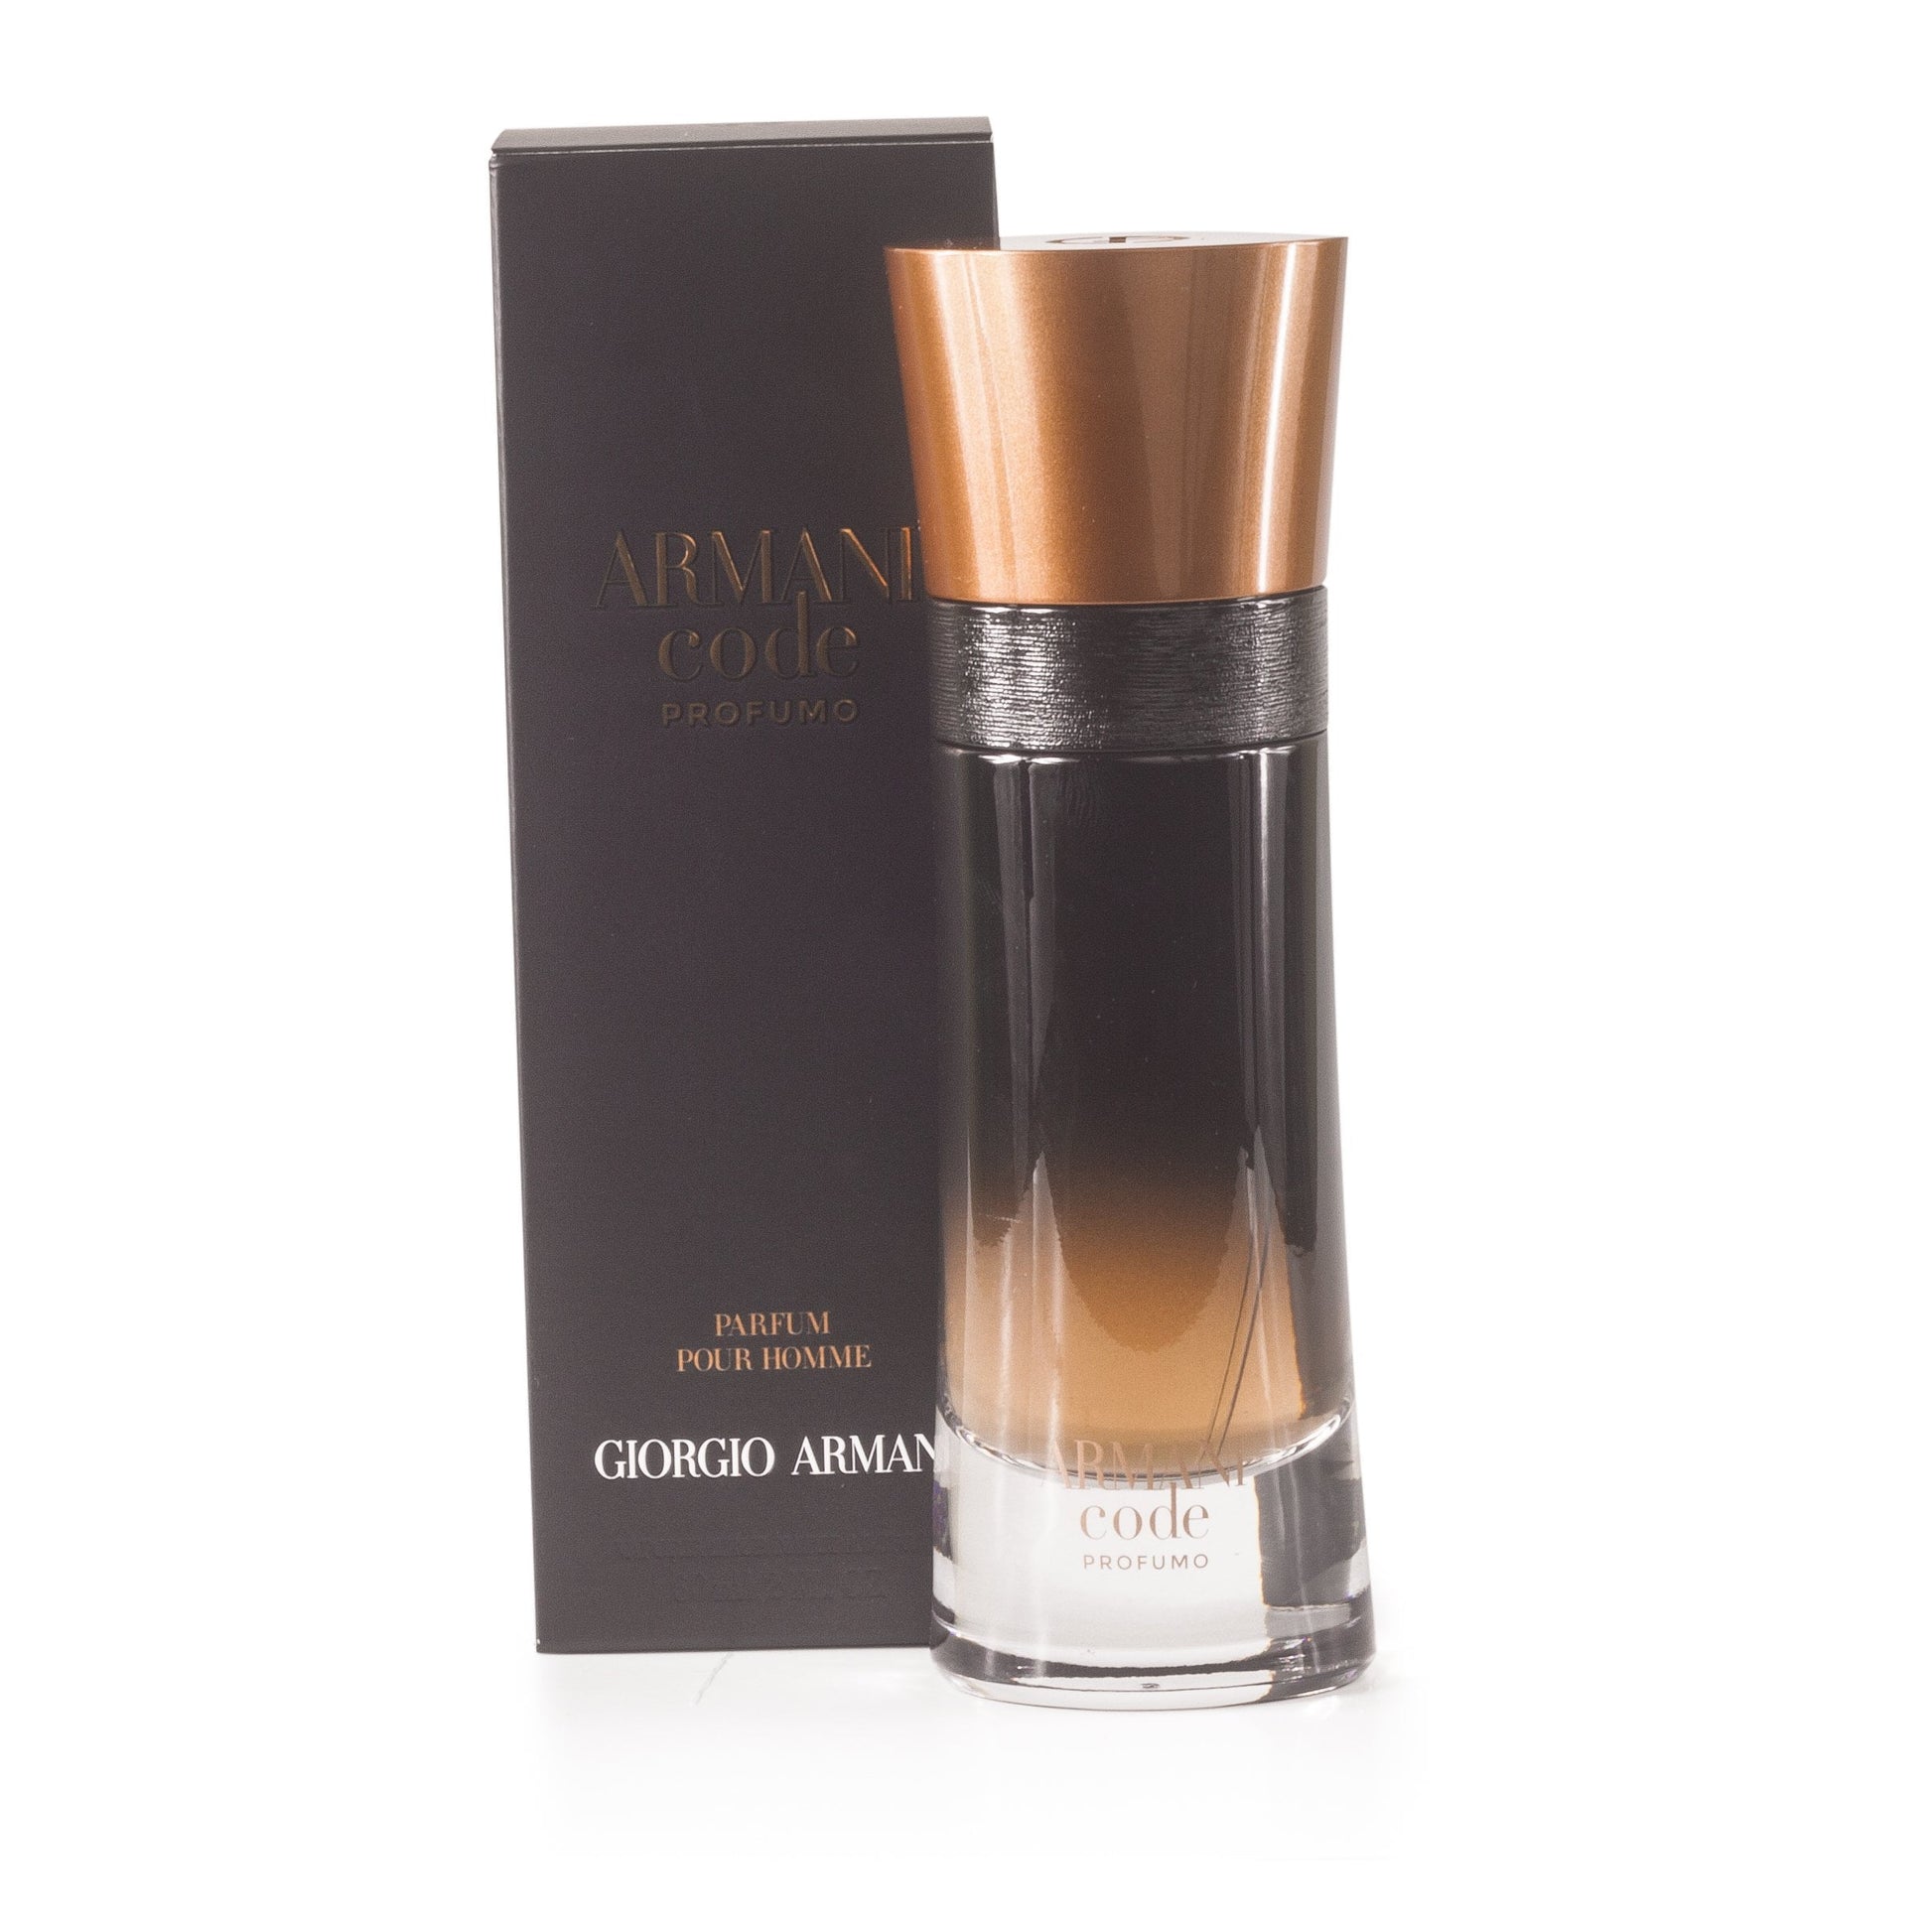 Armani Code Profumo Parfum Spray for Men by Giorgio Armani, Product image 4